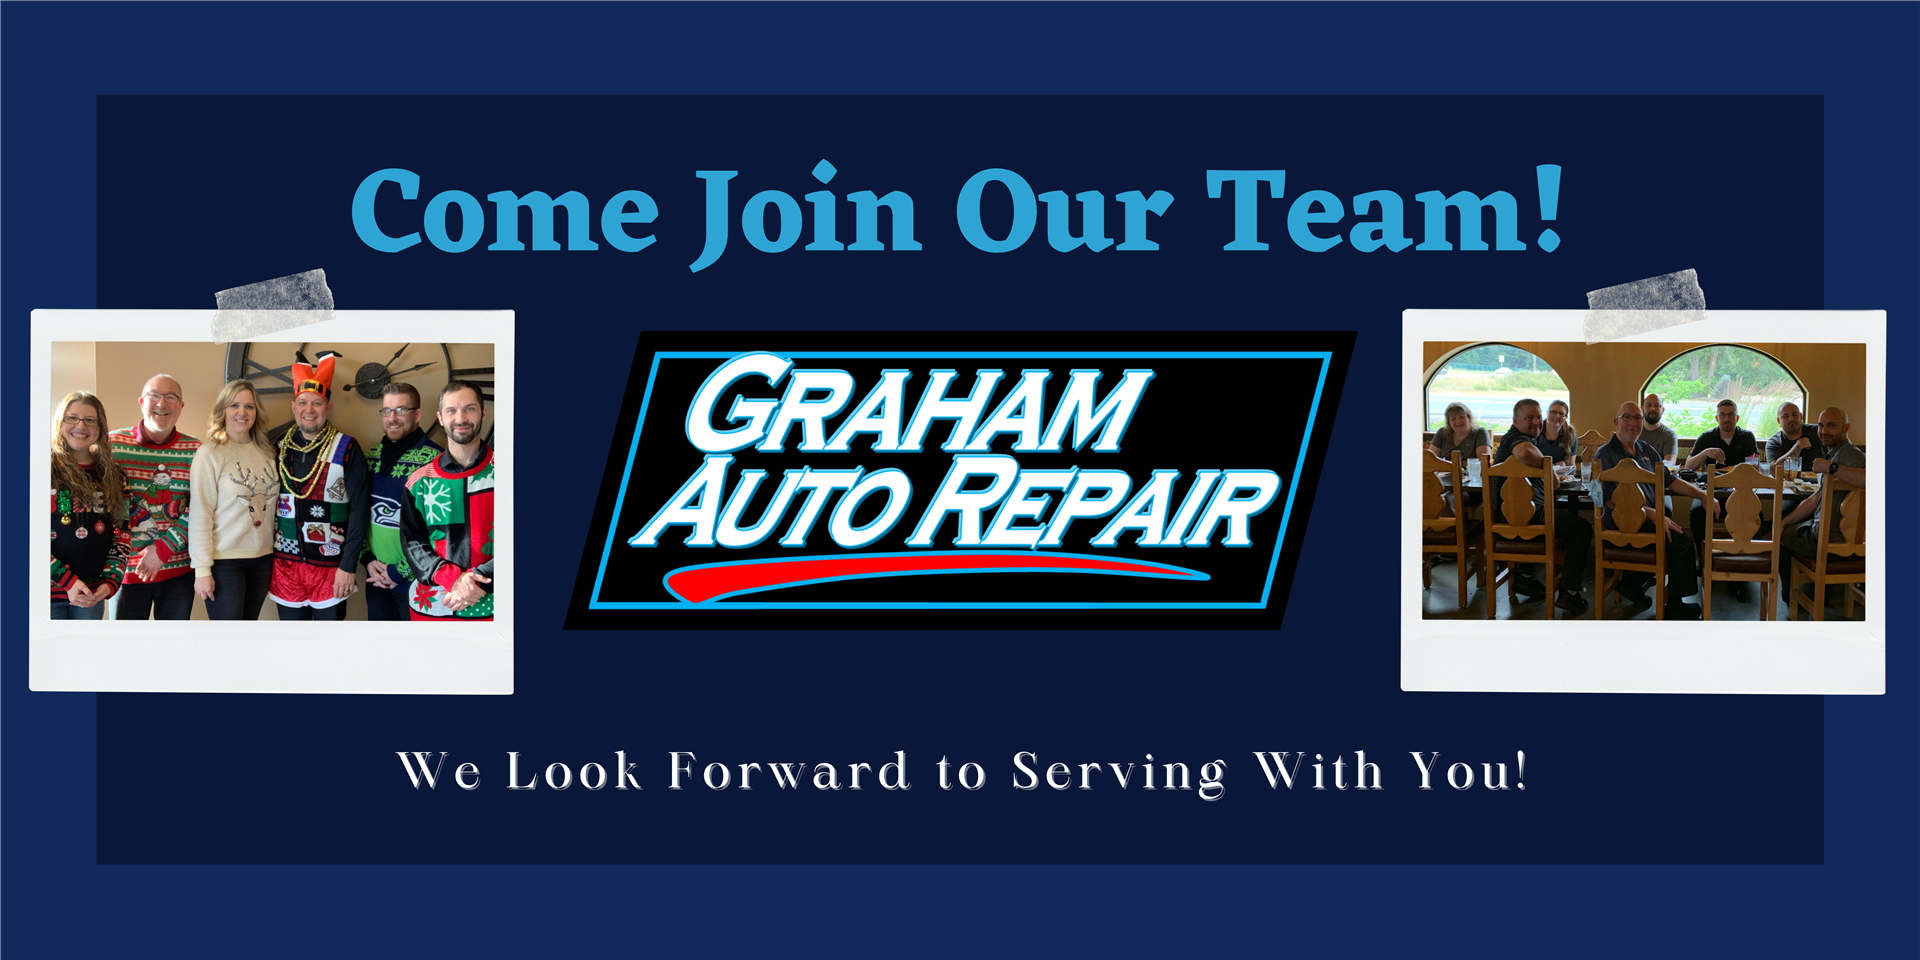 Graham Auto Repair - Automotive Technician Job in Graham, WA 98338 - Join Our Team